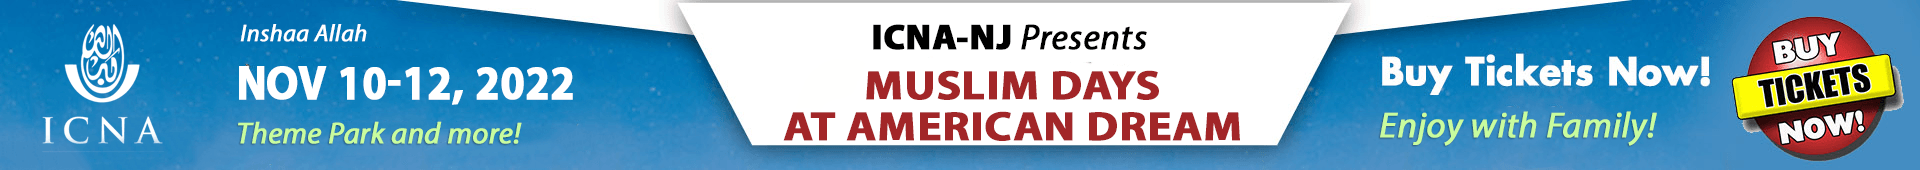 Muslim Family Day at American Dream Mall Logo